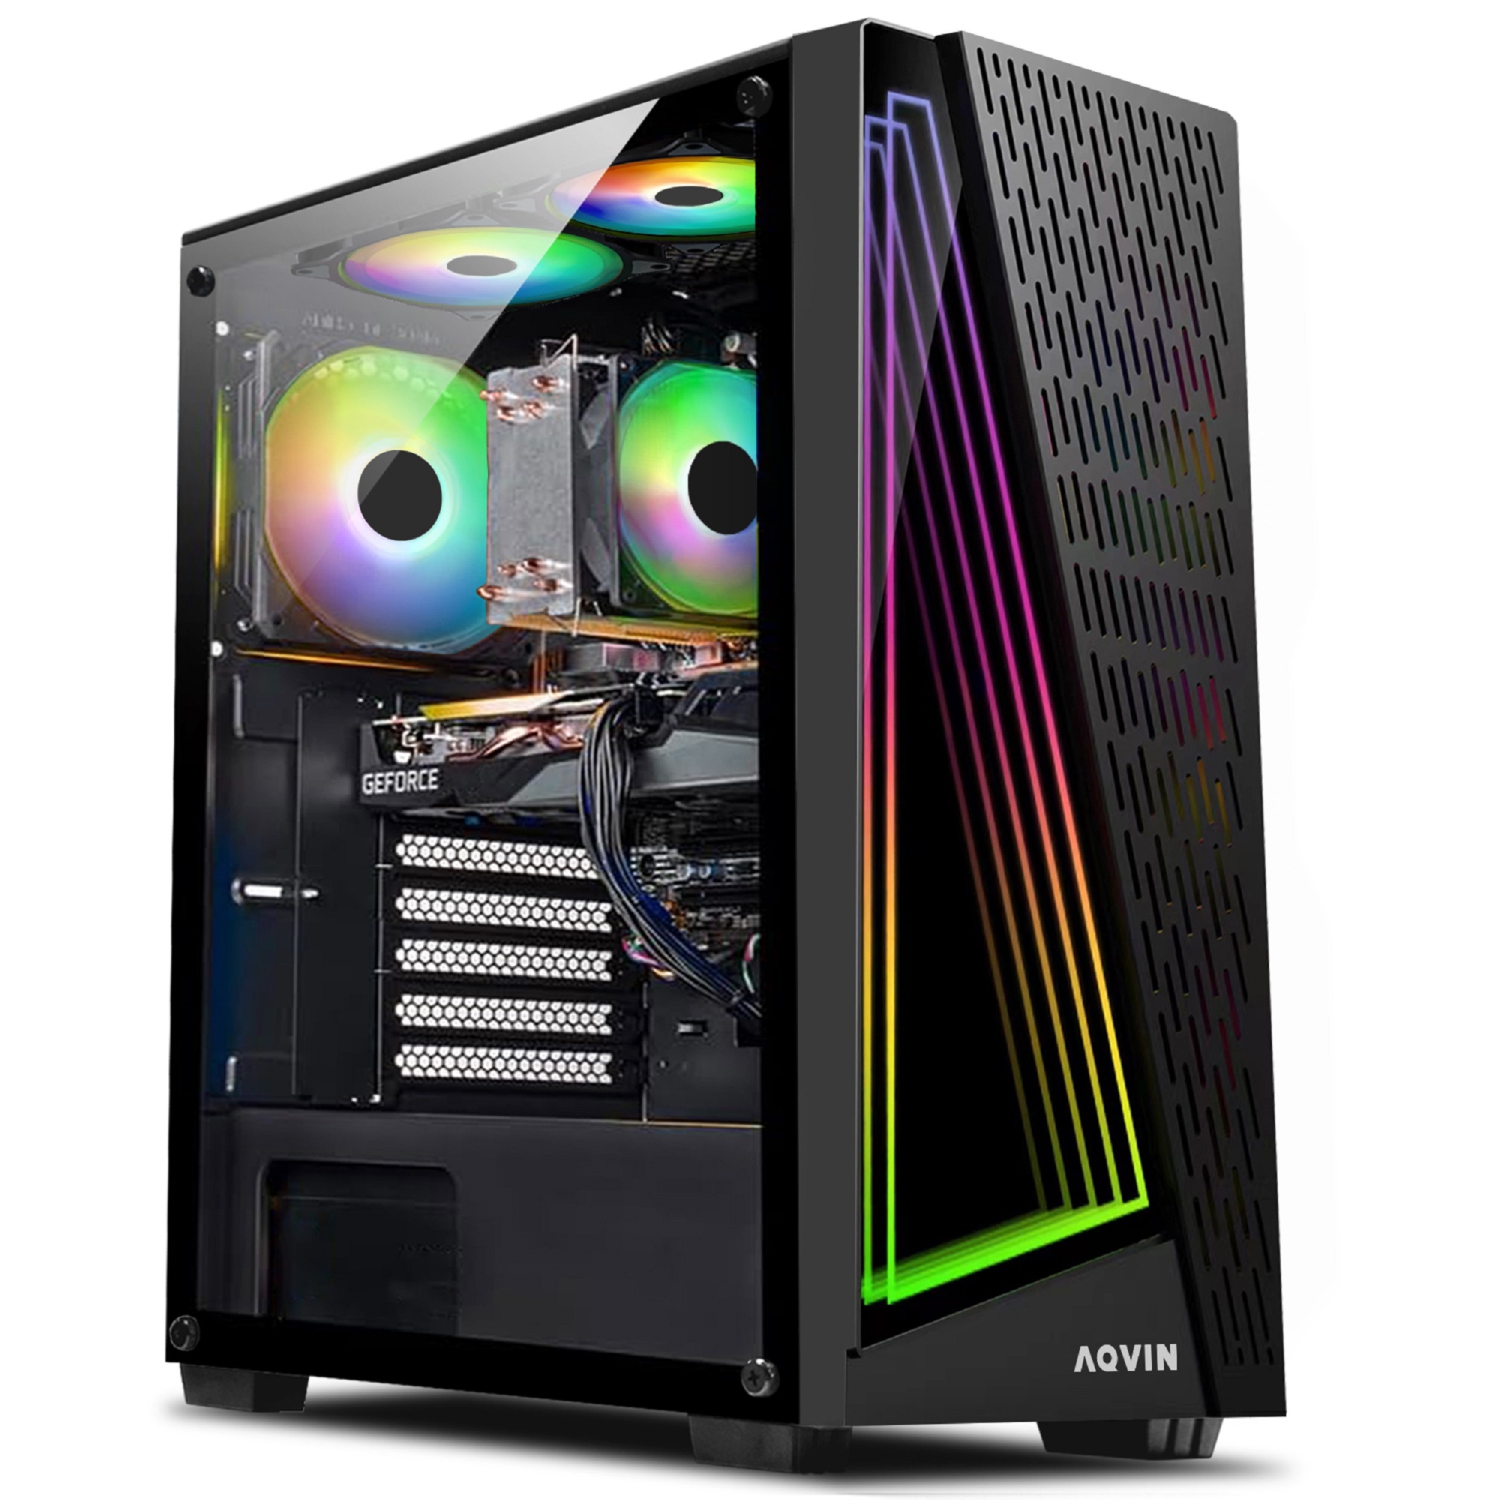 AQVIN Prebuilt Gaming PC Desktop Computer, GeForce GTX 1660 Super 6GB, Intel Core i7 Processor, 32GB DDR4 RAM, 2000GB (Fast Boot) SSD, WIN 10 Pro, Gaming Keyboard and Mouse (AQ50)